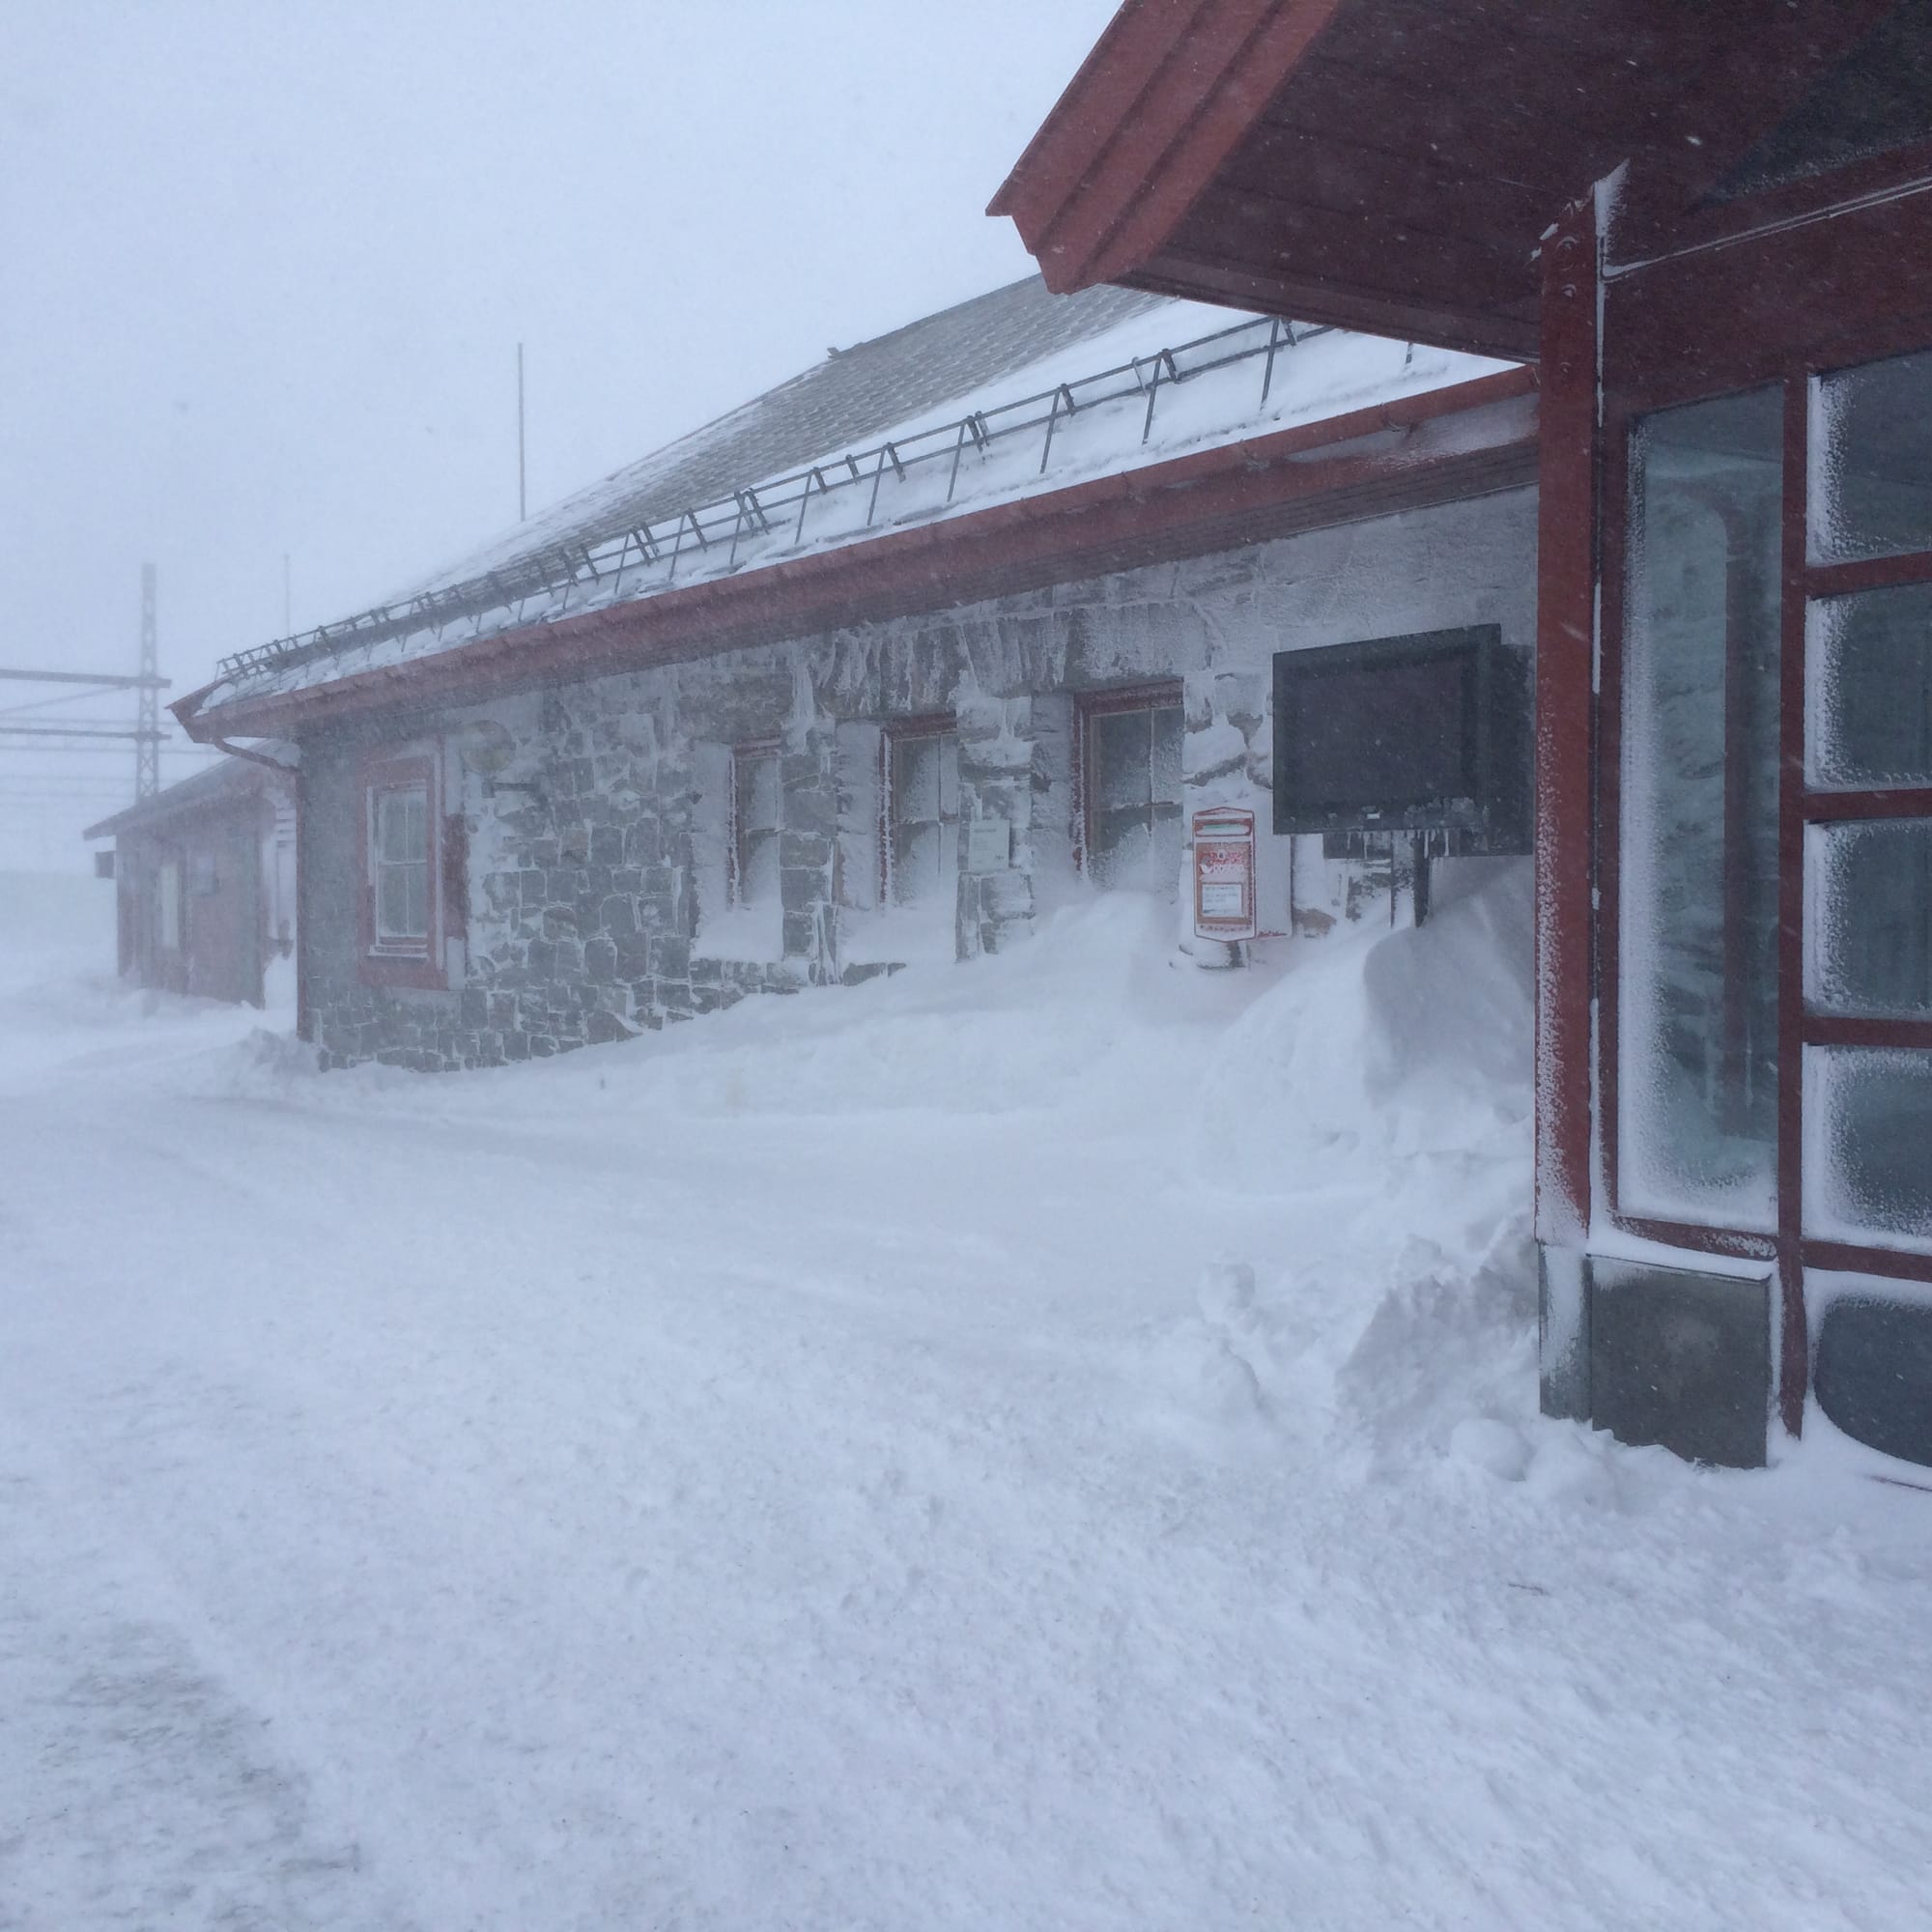 The snowstorm in Tromsø